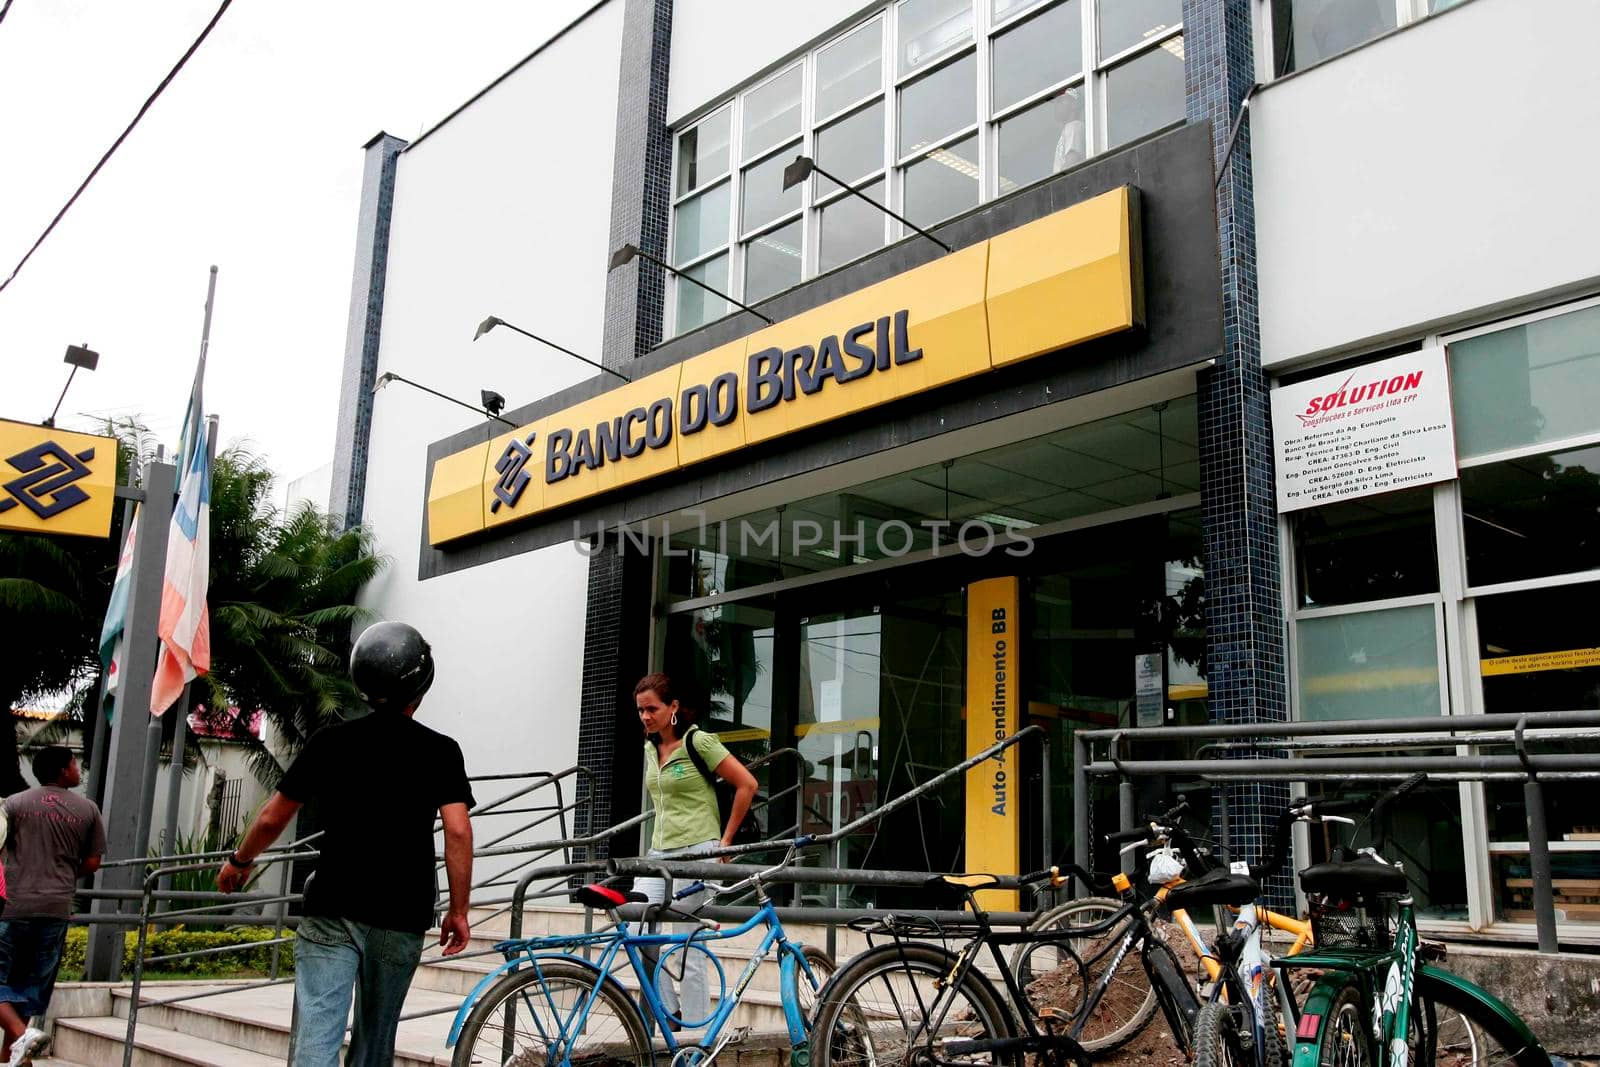 bank of brazil branch in eunapolis by joasouza